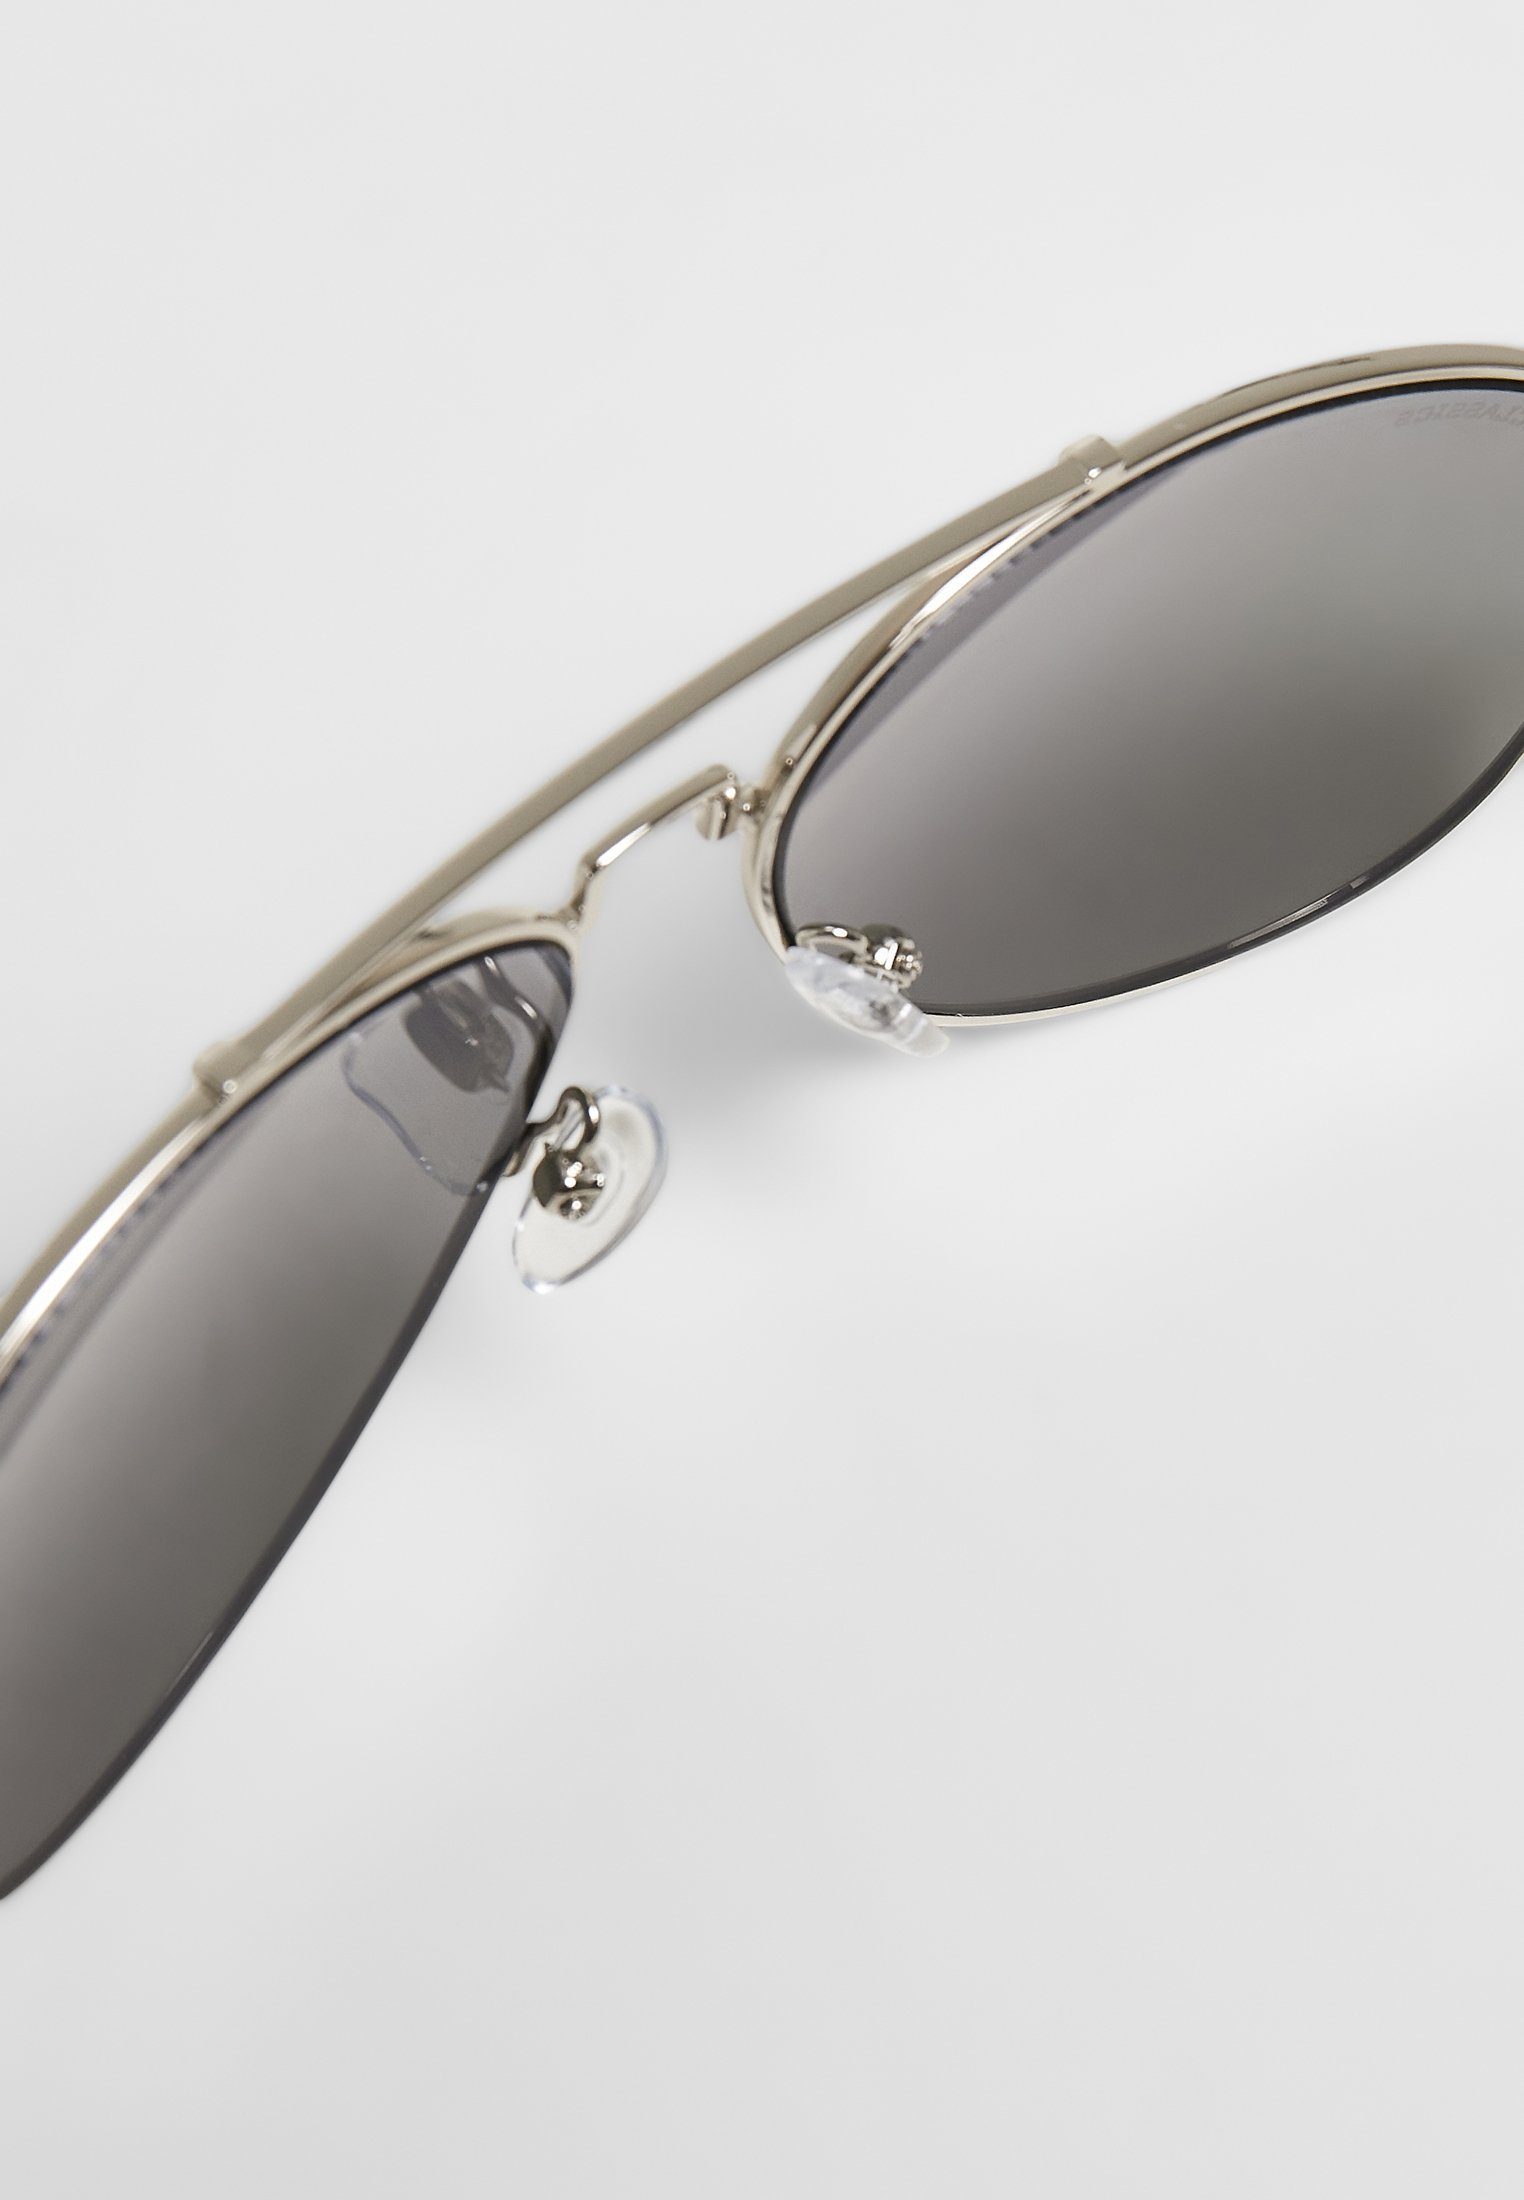 Sunglasses URBAN CLASSICS Mumbo Mirror UC Sonnenbrille silver/purple Accessoires